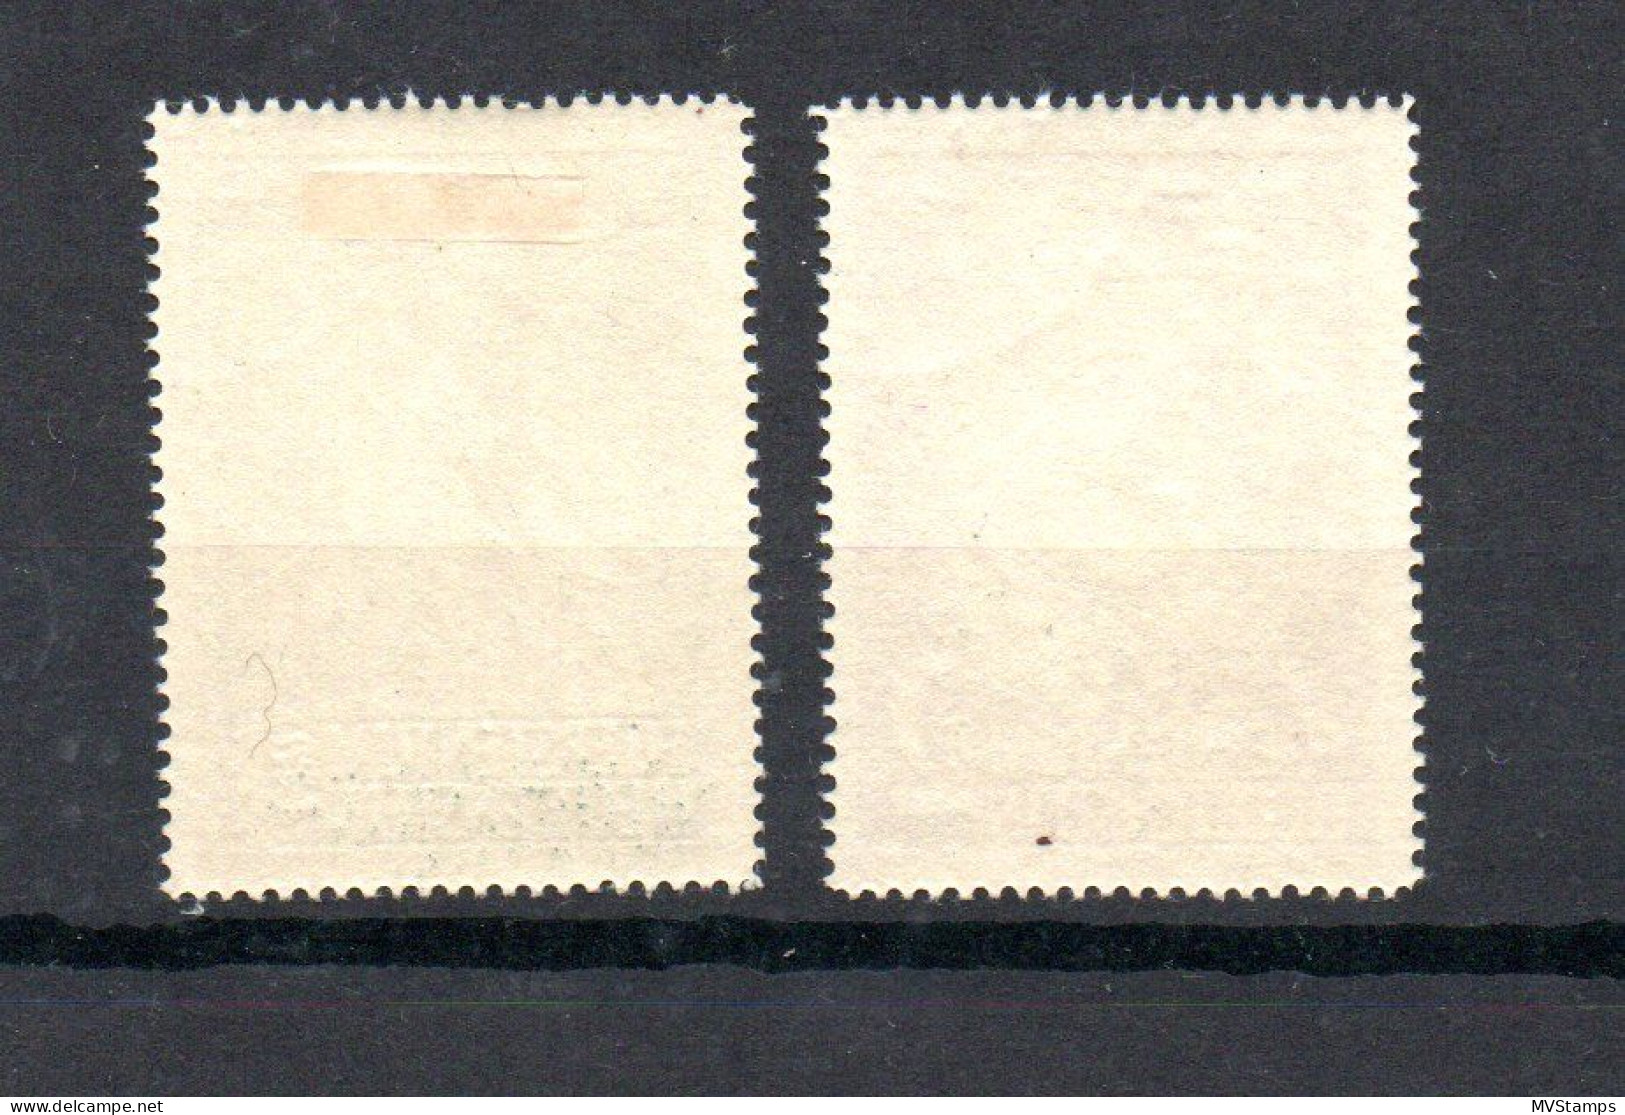 Liechtenstein 1955 Set Royal Pair Stamps (Michel 332/33) Nice Used - Usados